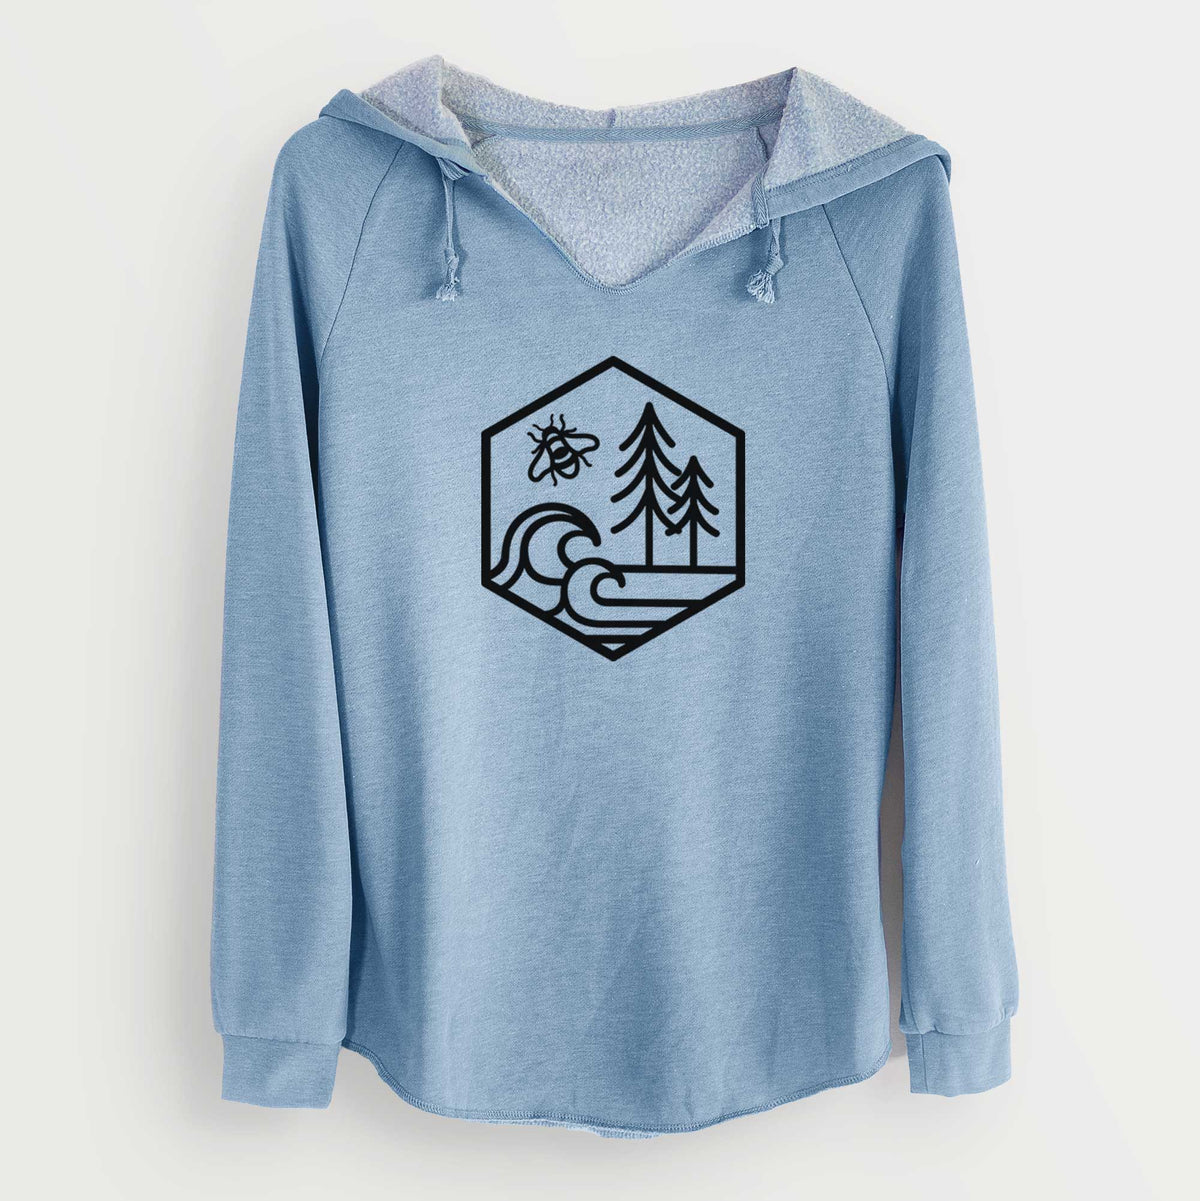 Harmonious Hexagon - Bees, Seas, Trees - Cali Wave Hooded Sweatshirt